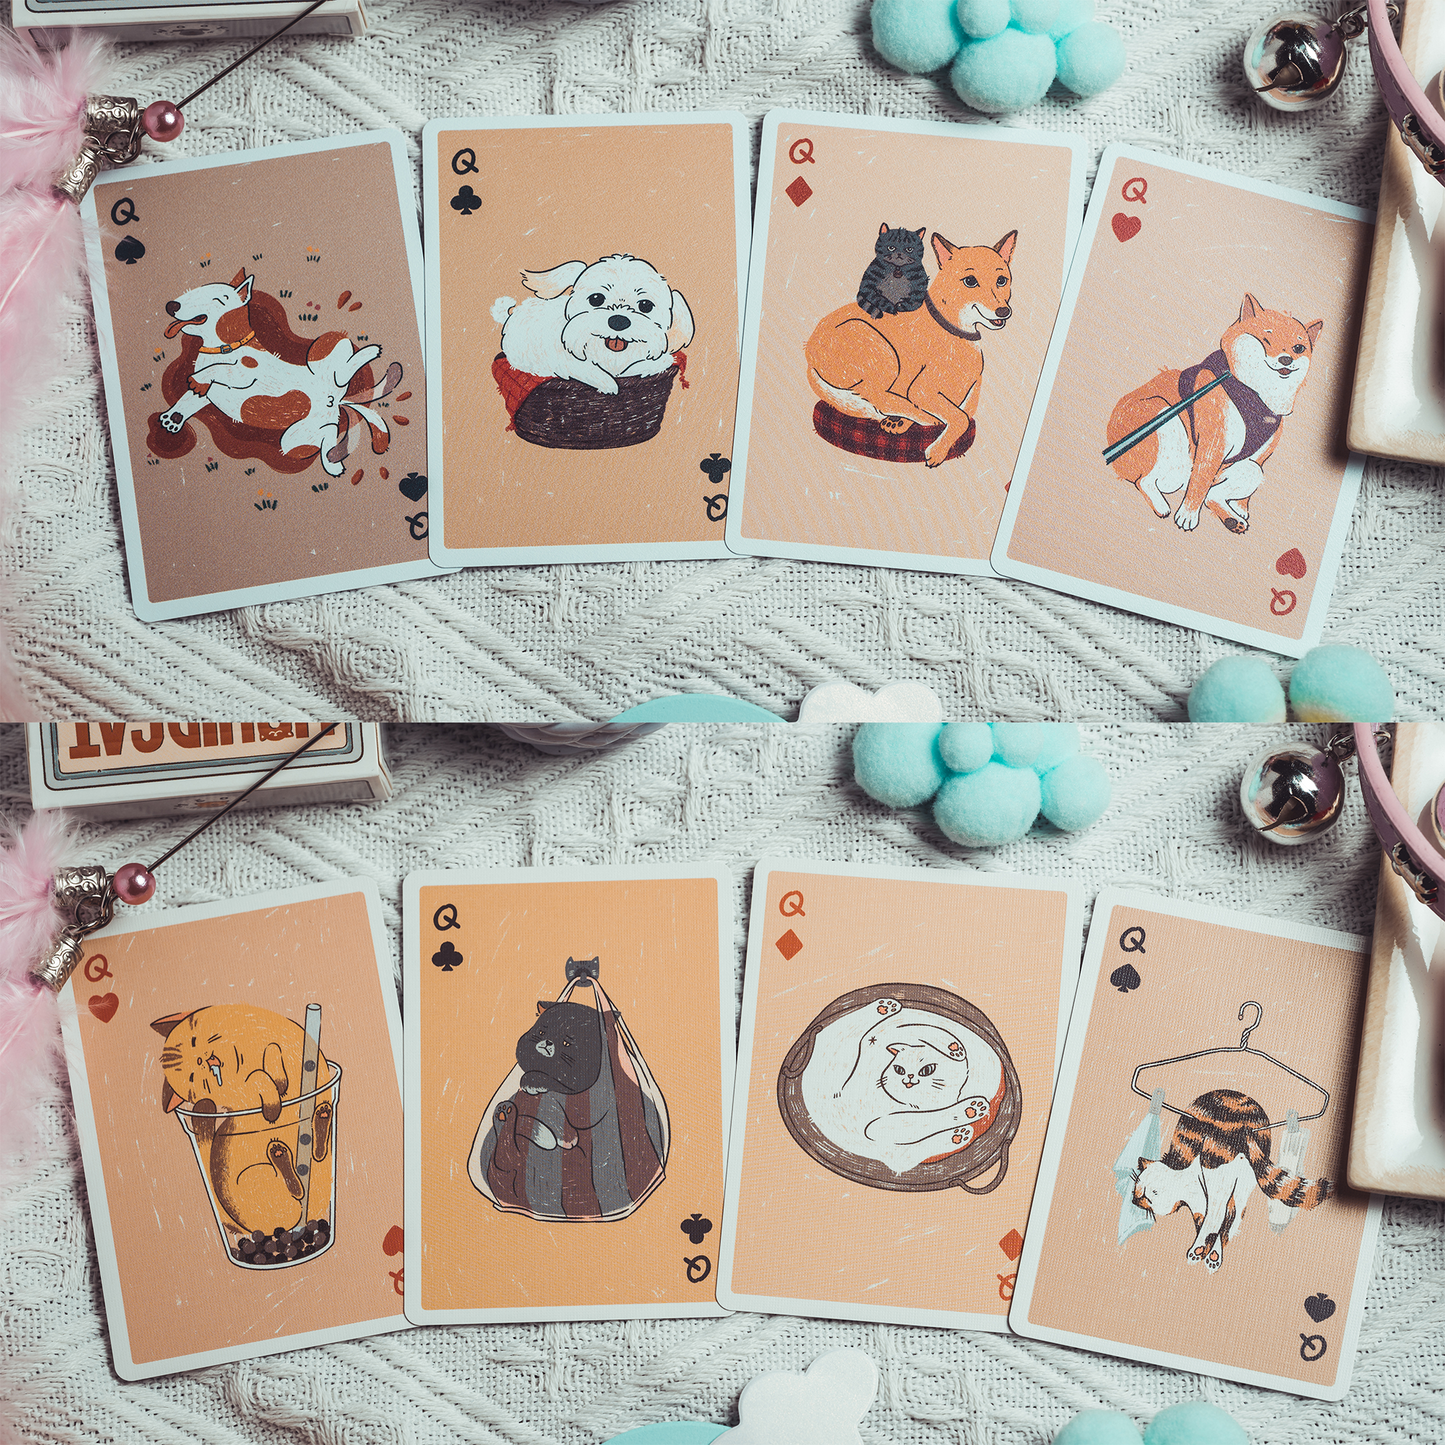 Naughty Dog & Liquid Cat Playing Cards